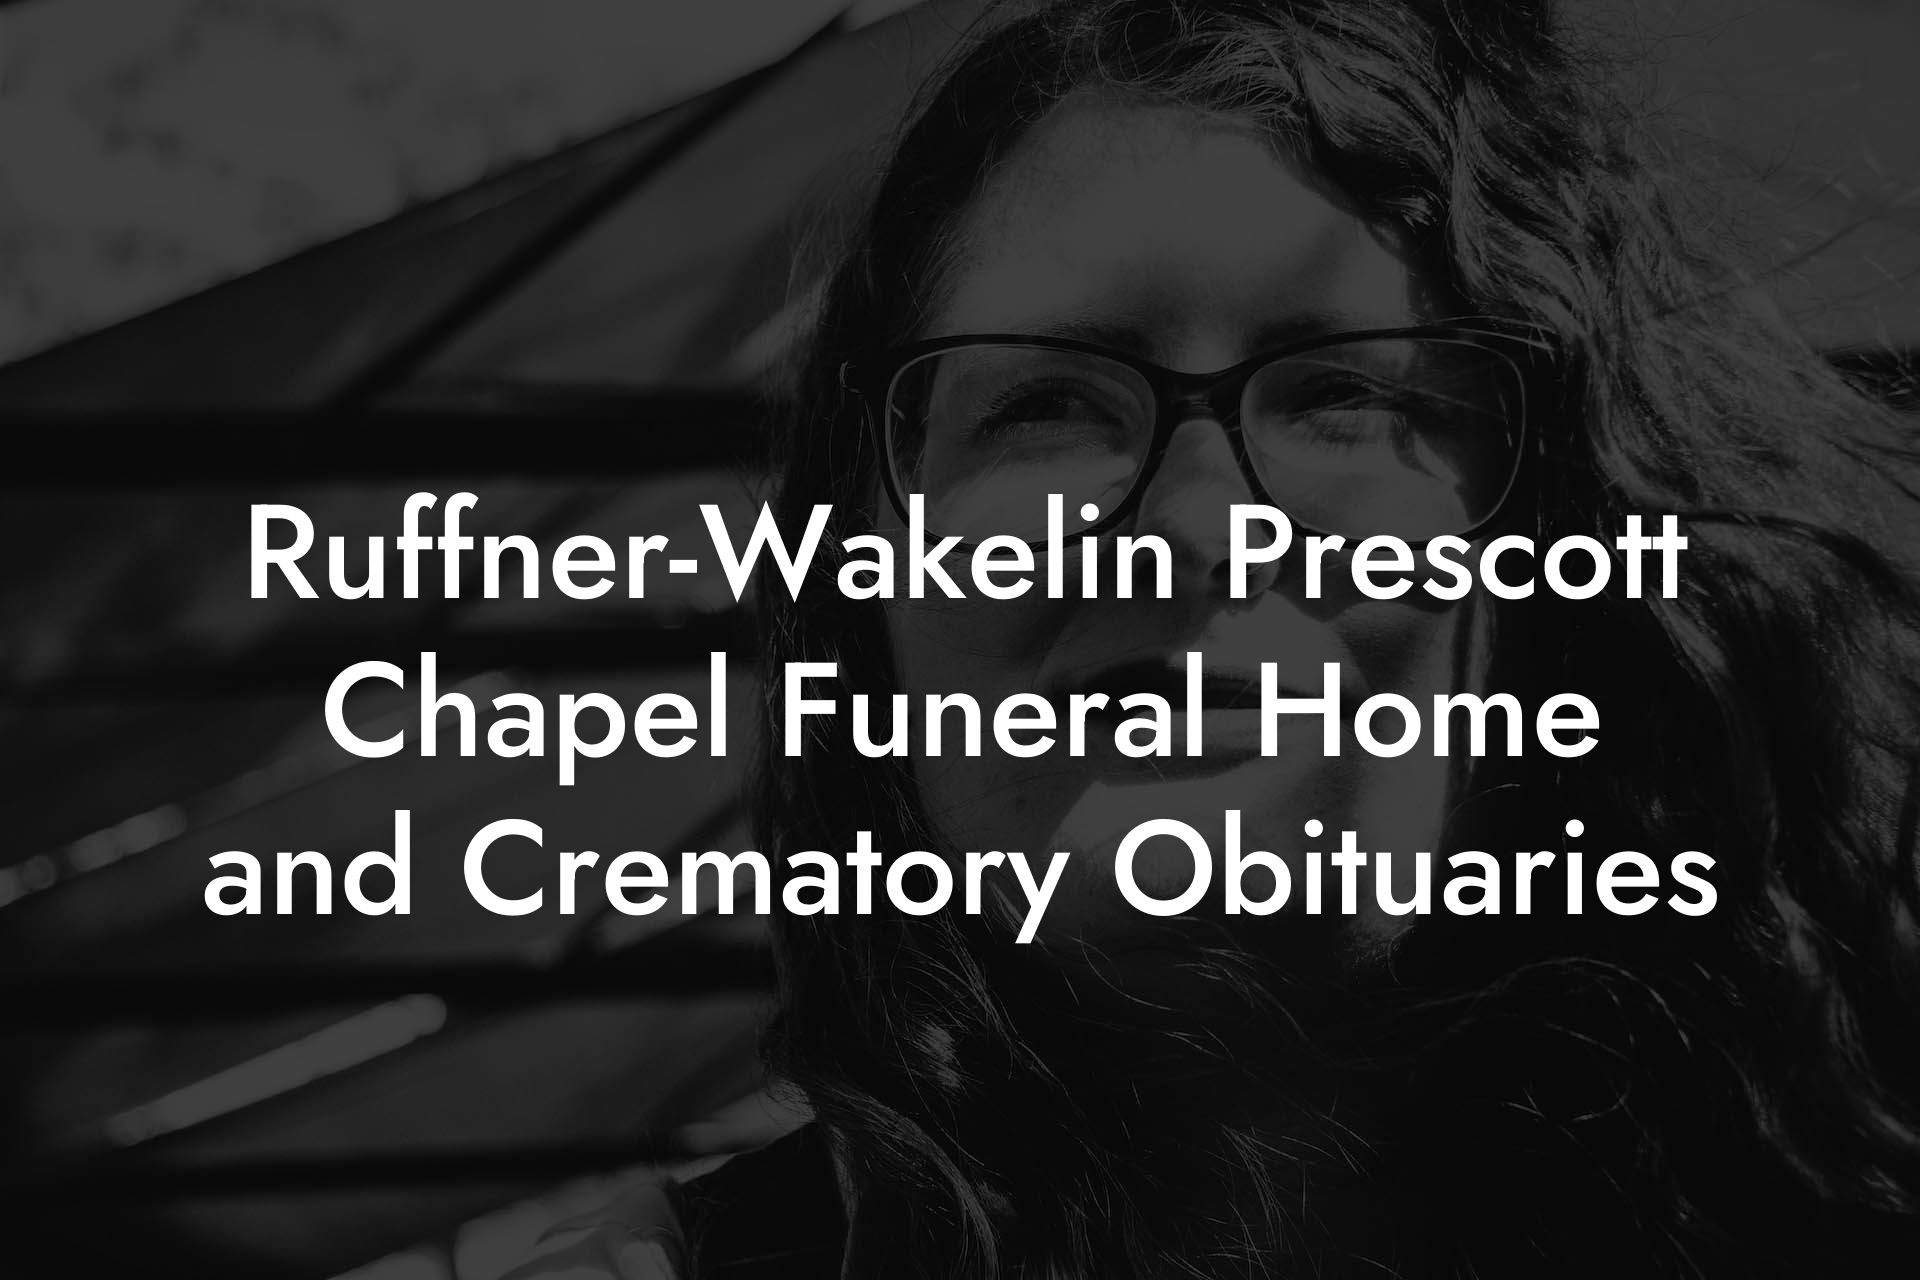 Ruffner-Wakelin Prescott Chapel Funeral Home and Crematory Obituaries